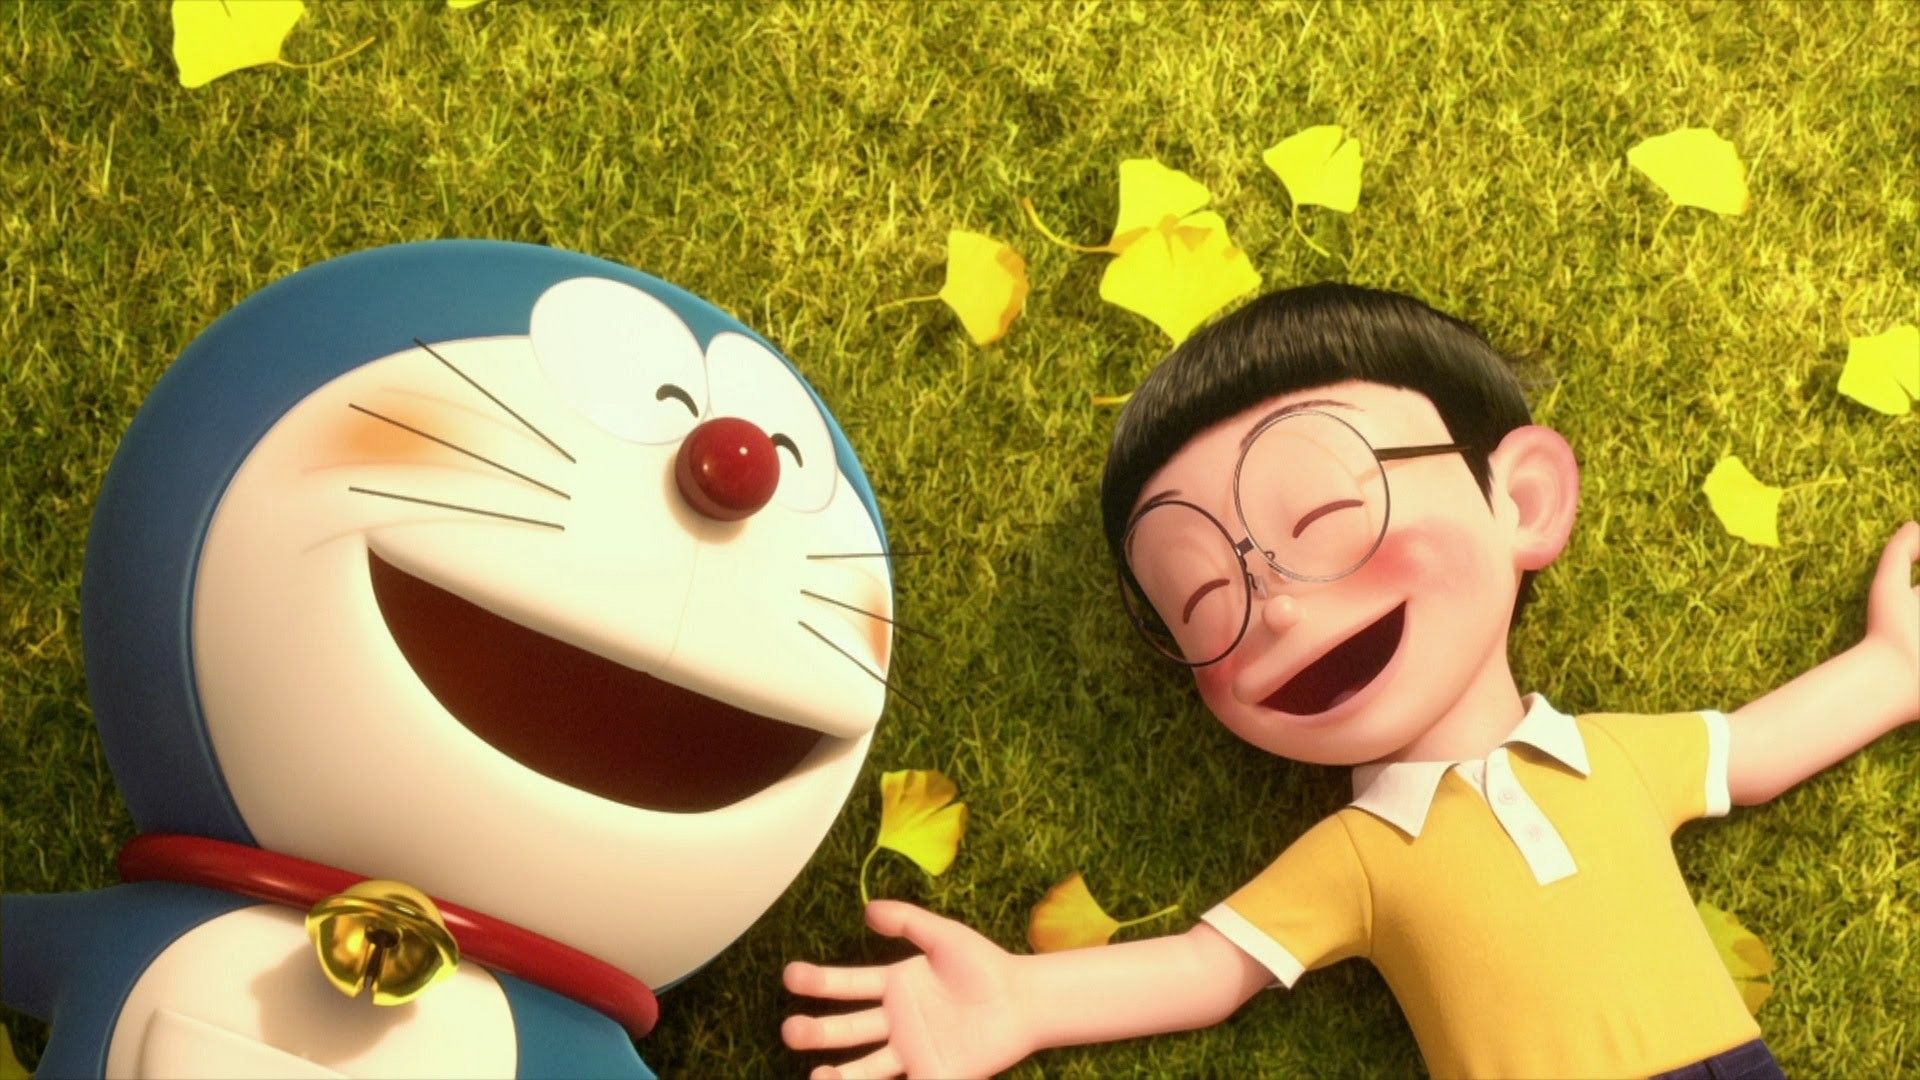 Doraemon and Friends Wallpaper 2018